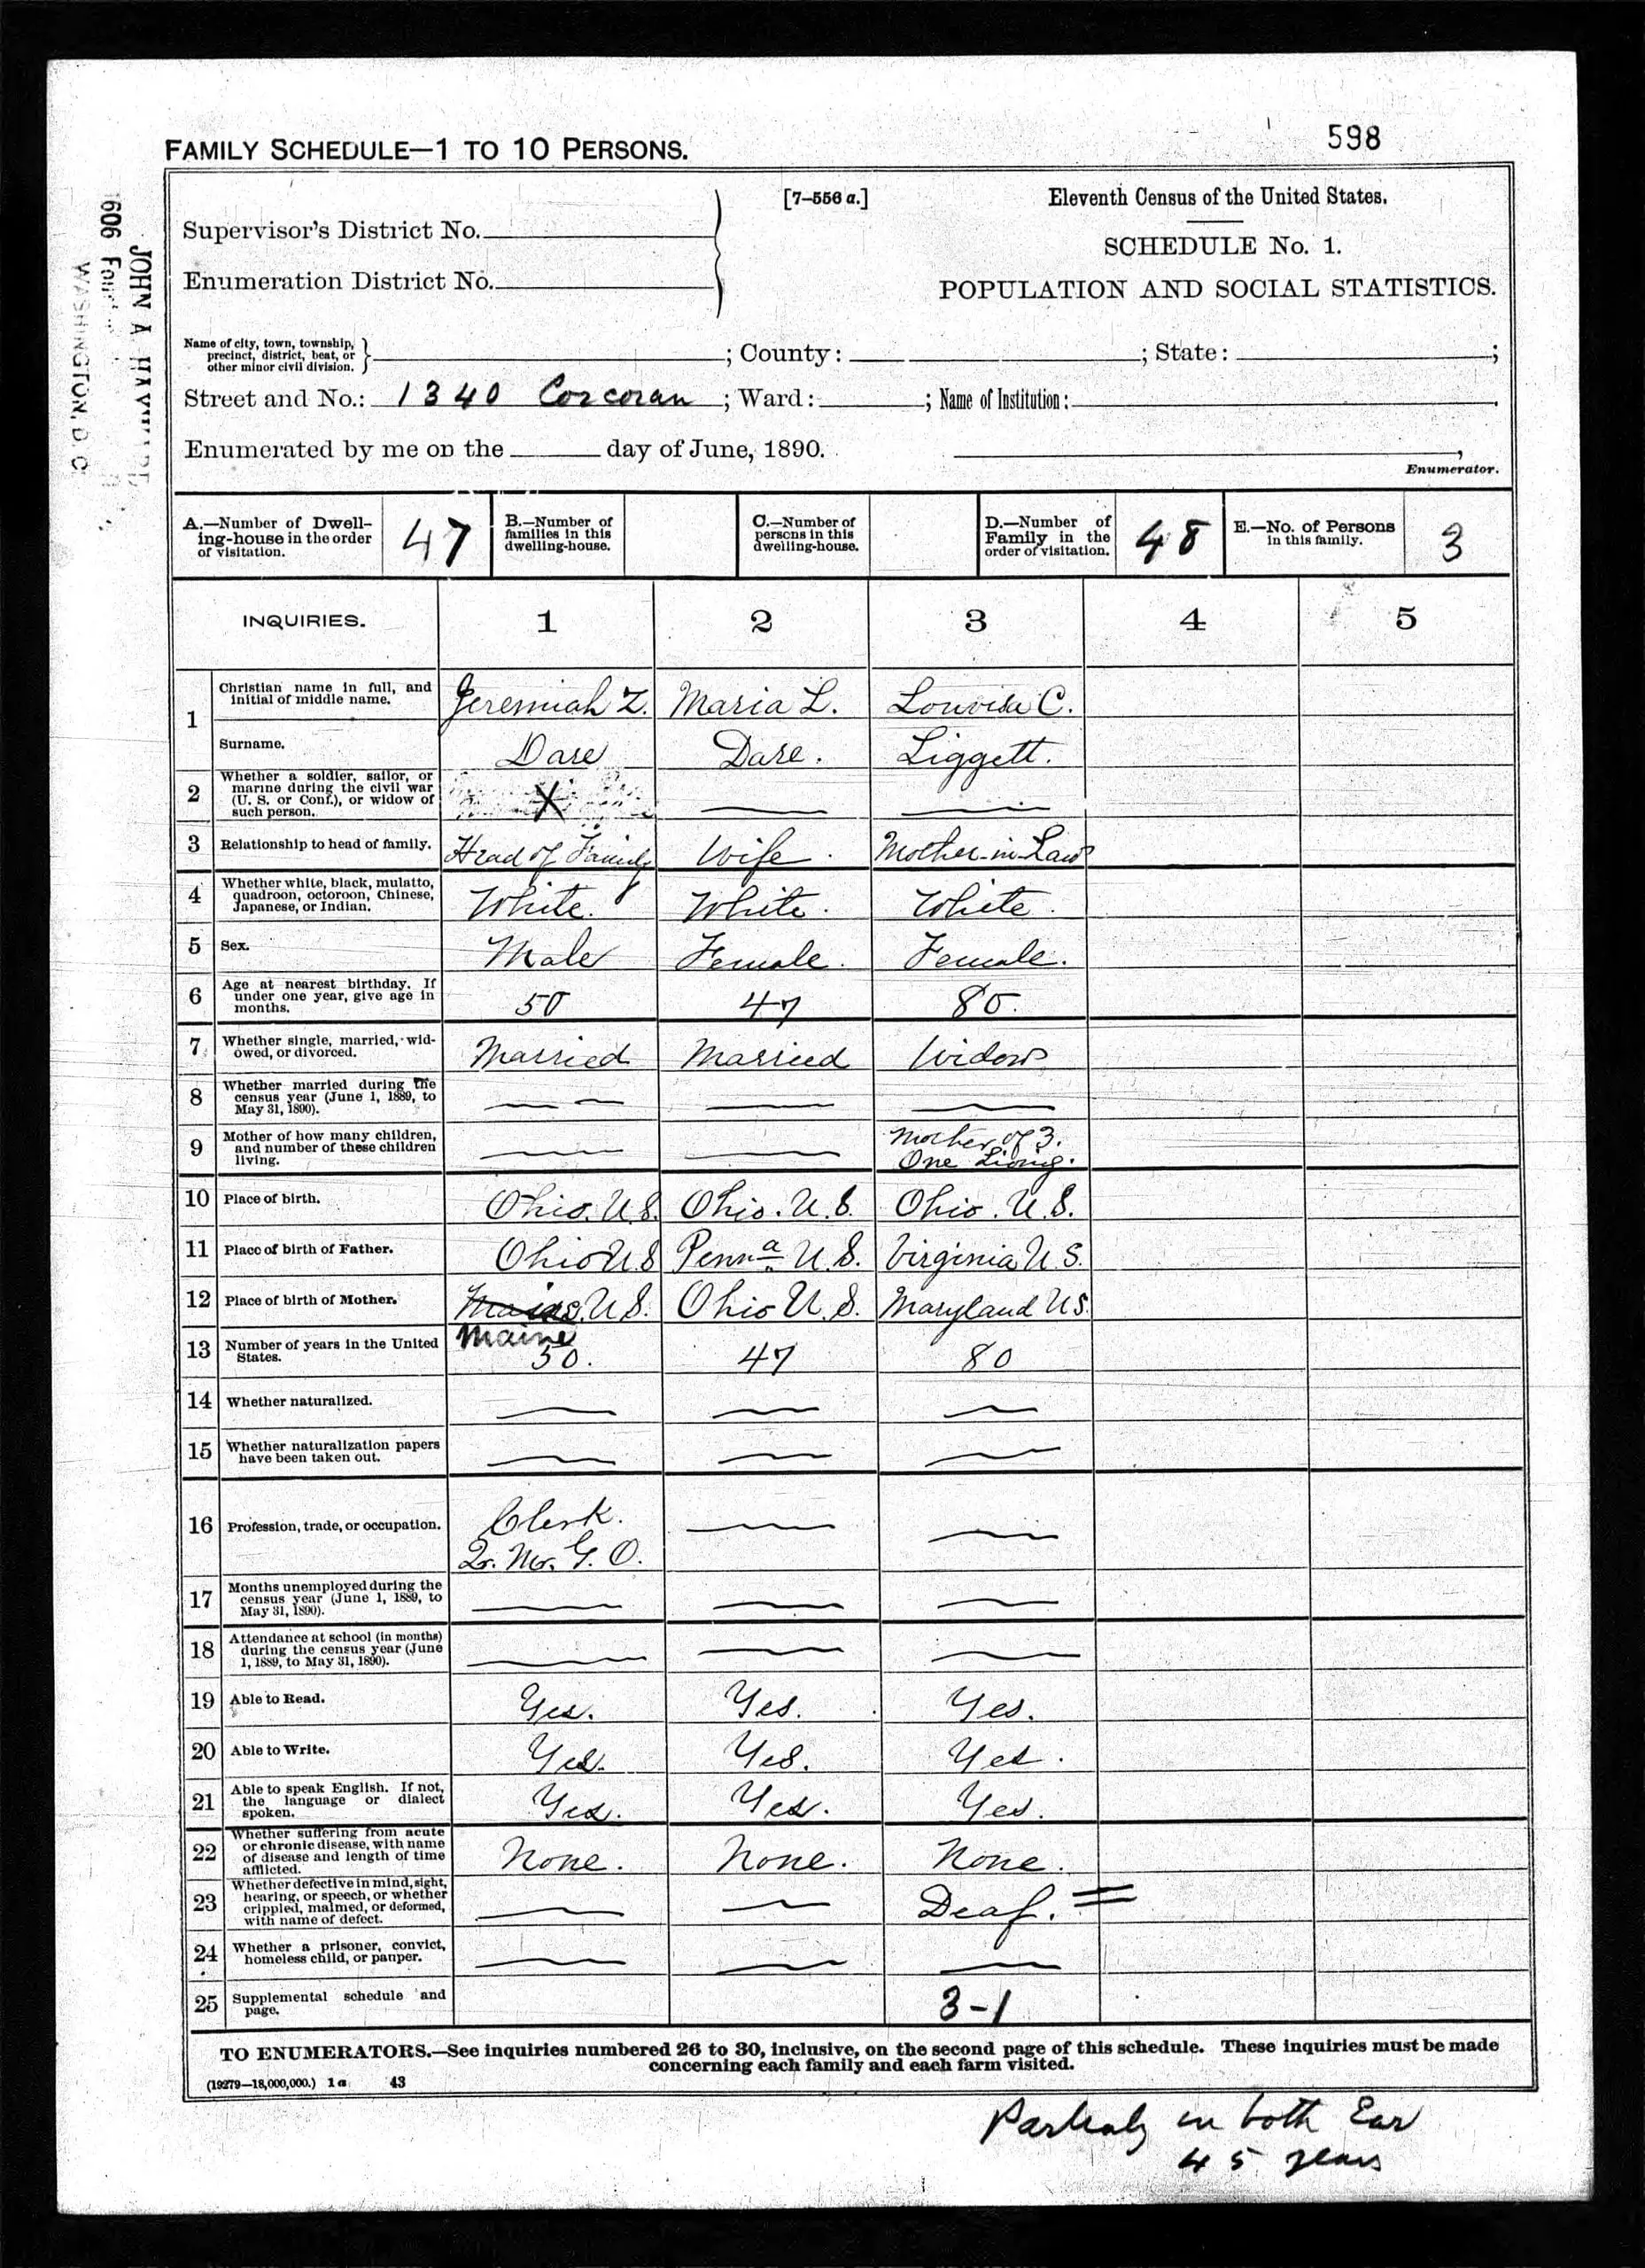 The Dare family in the 1890 U.S. Census (Ancestry.com)